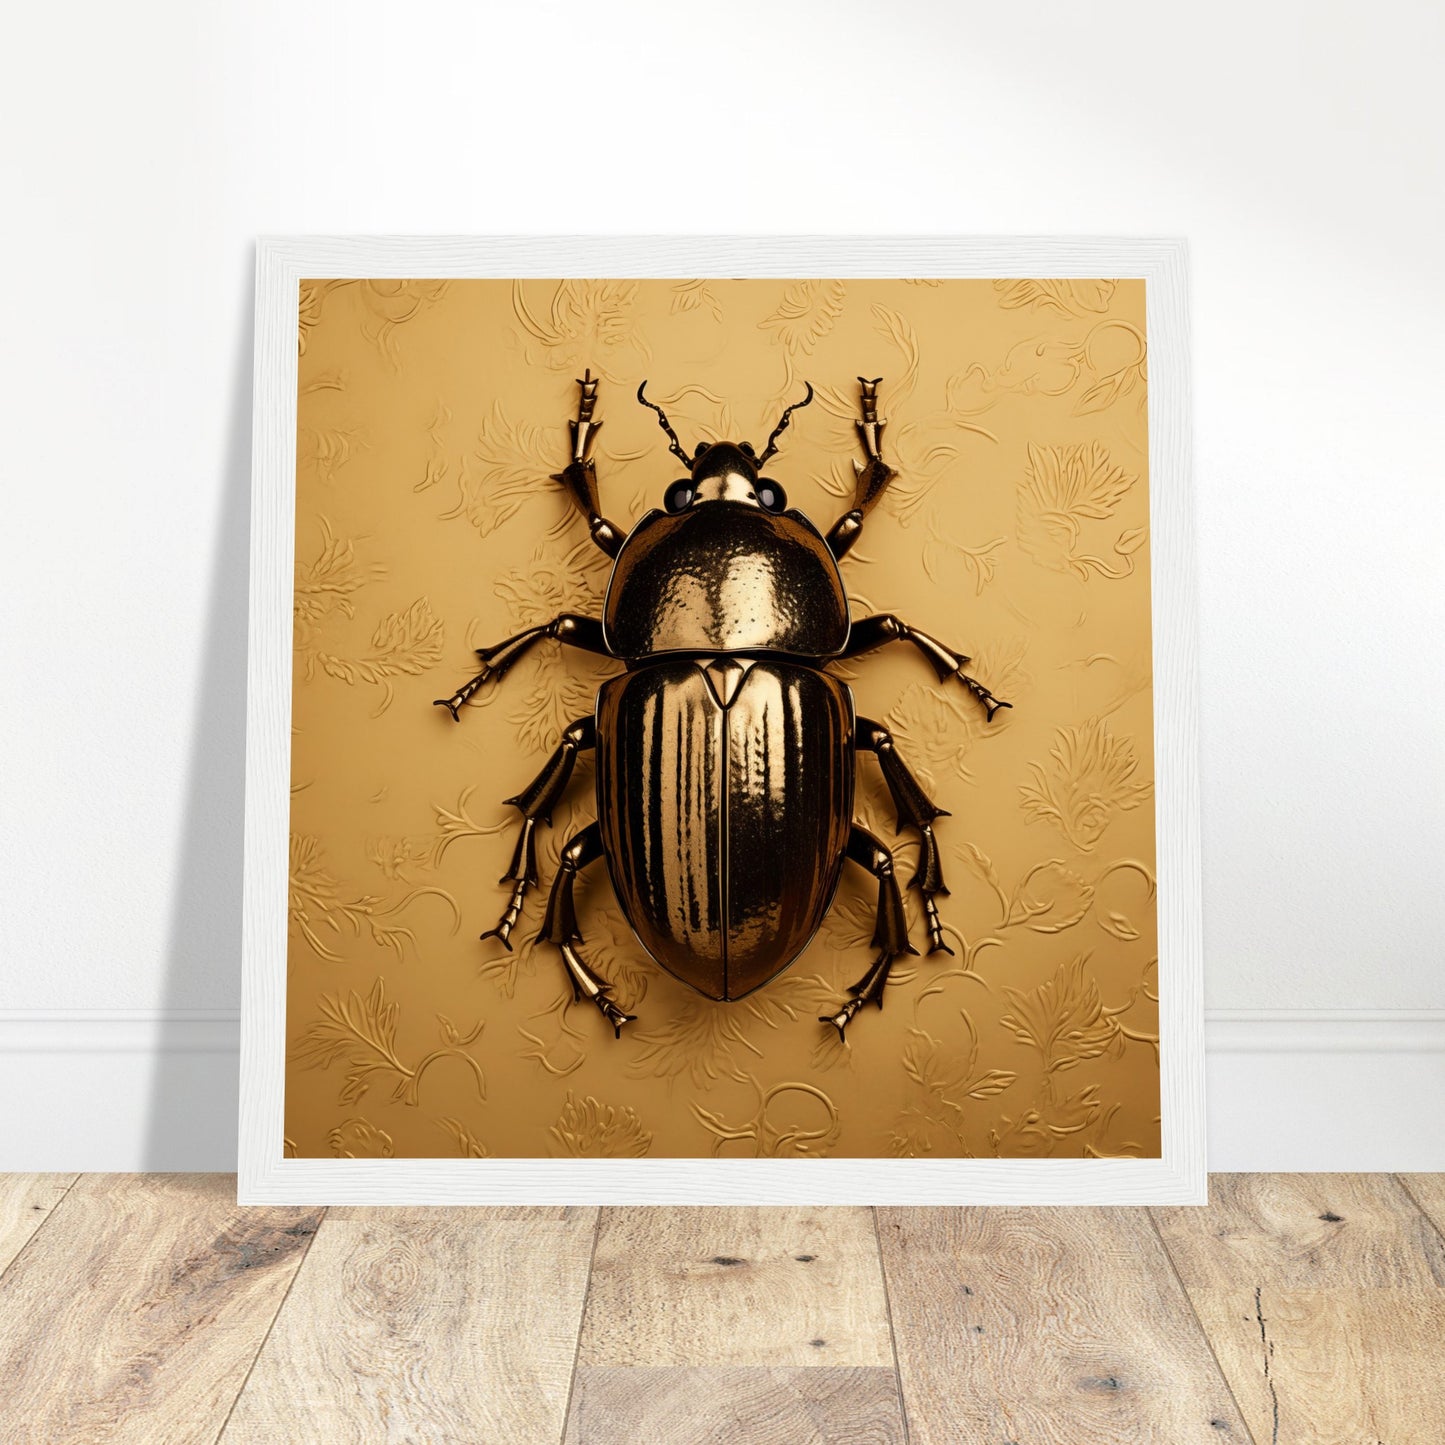 Golden Beetle Artwork - Print Room Ltd Black frame 30x30 cm / 12x12"